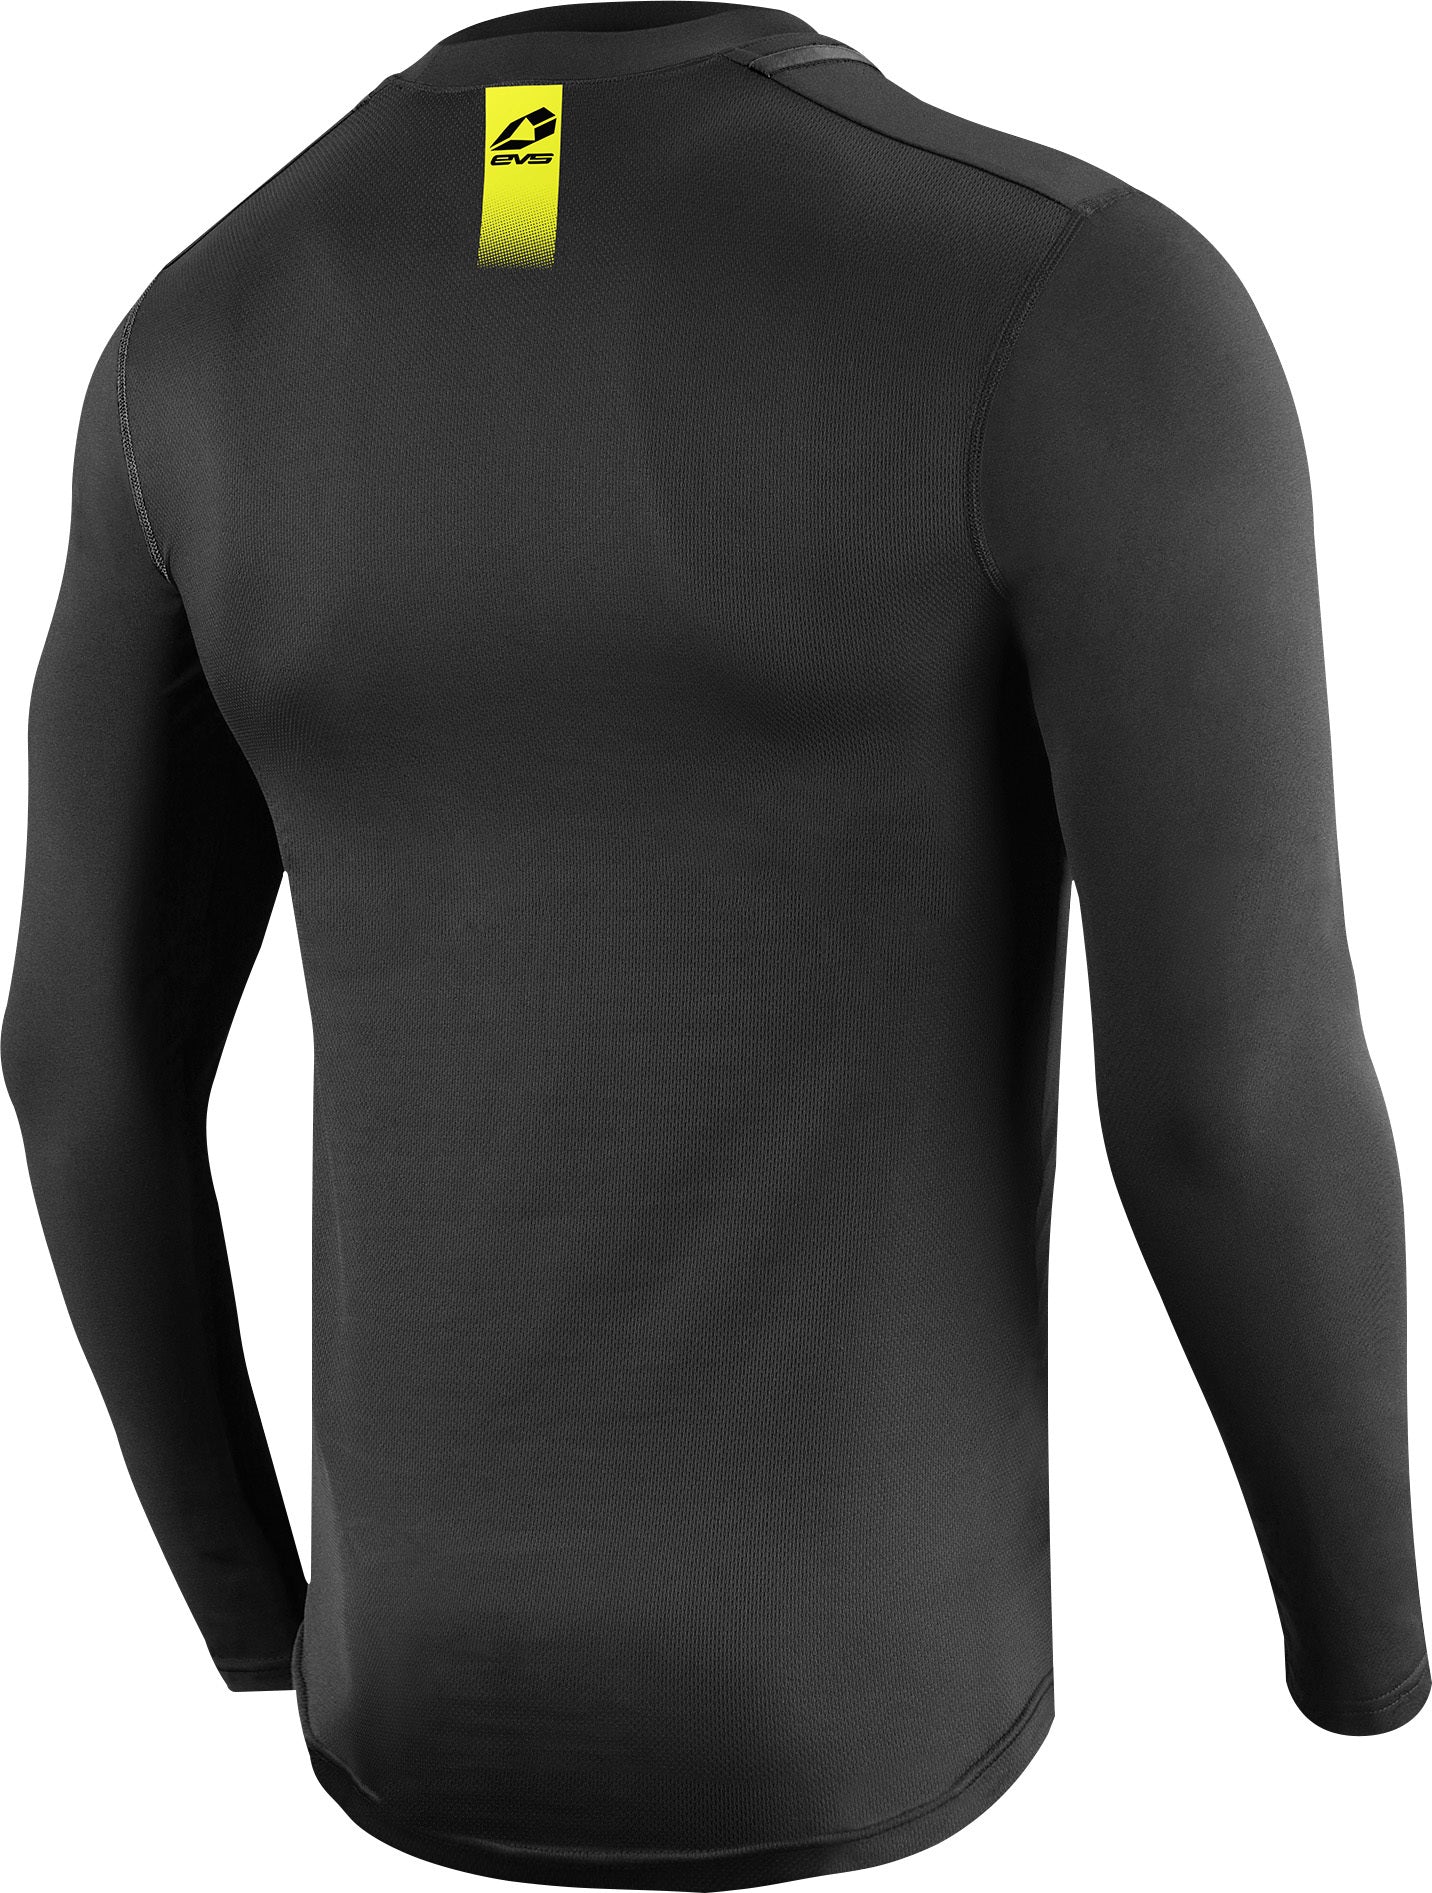 Long Sleeve Tug Shirt Black 2x